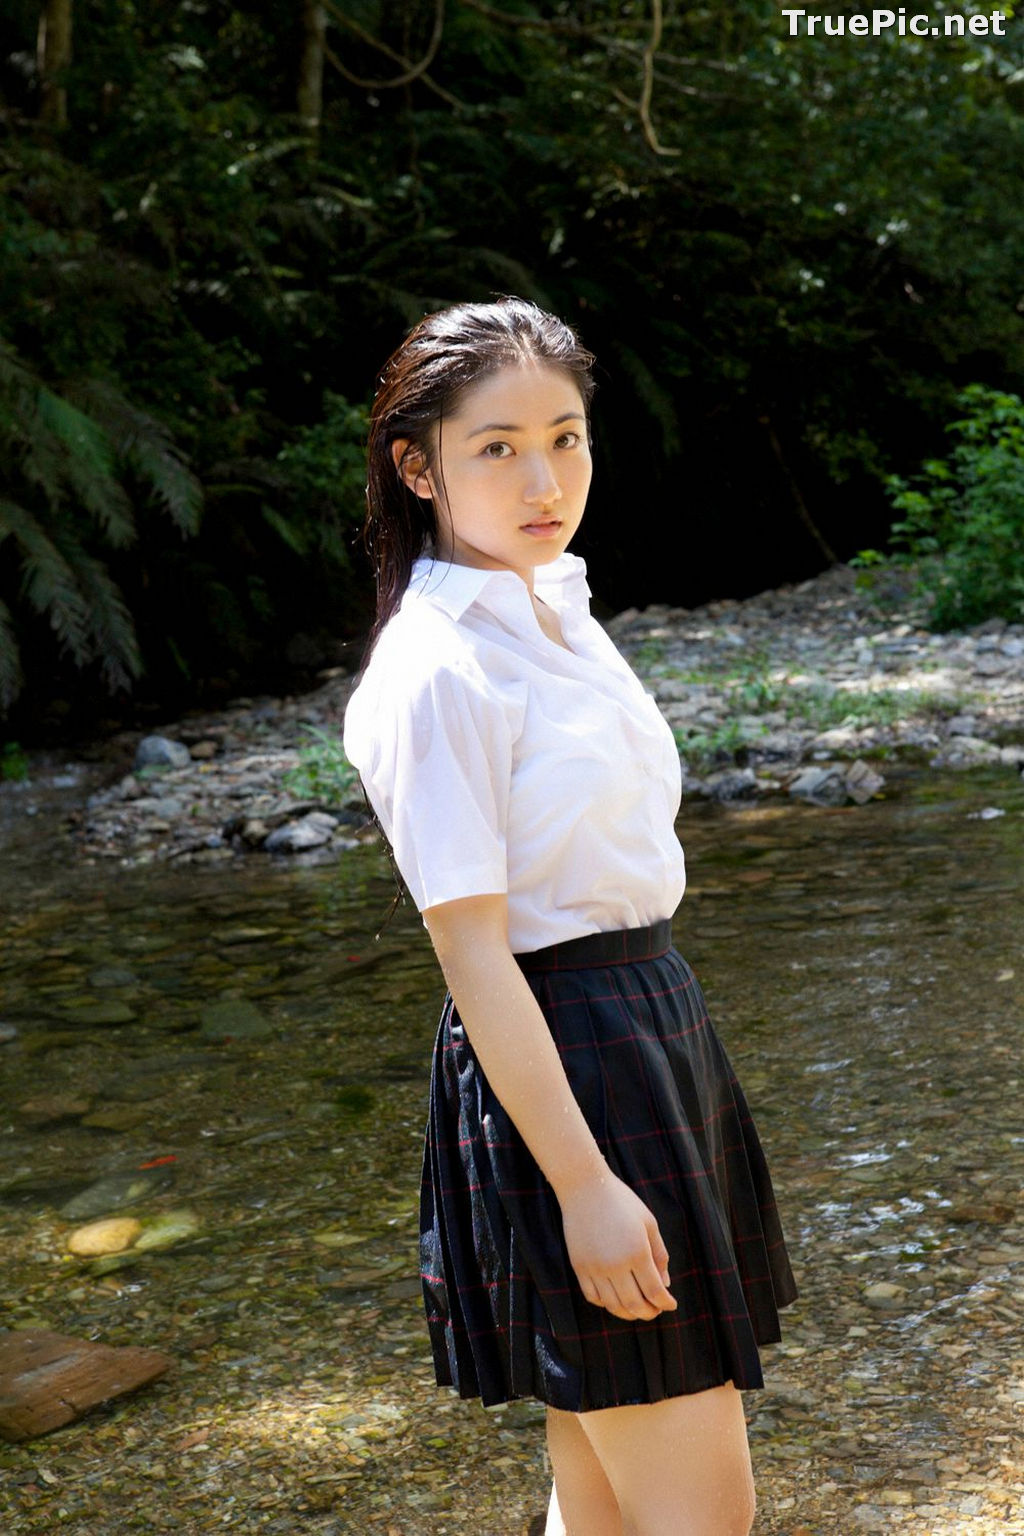 Image [YS Web] Vol.429 - Japanese Actress and Gravure Idol - Irie Saaya - TruePic.net - Picture-18